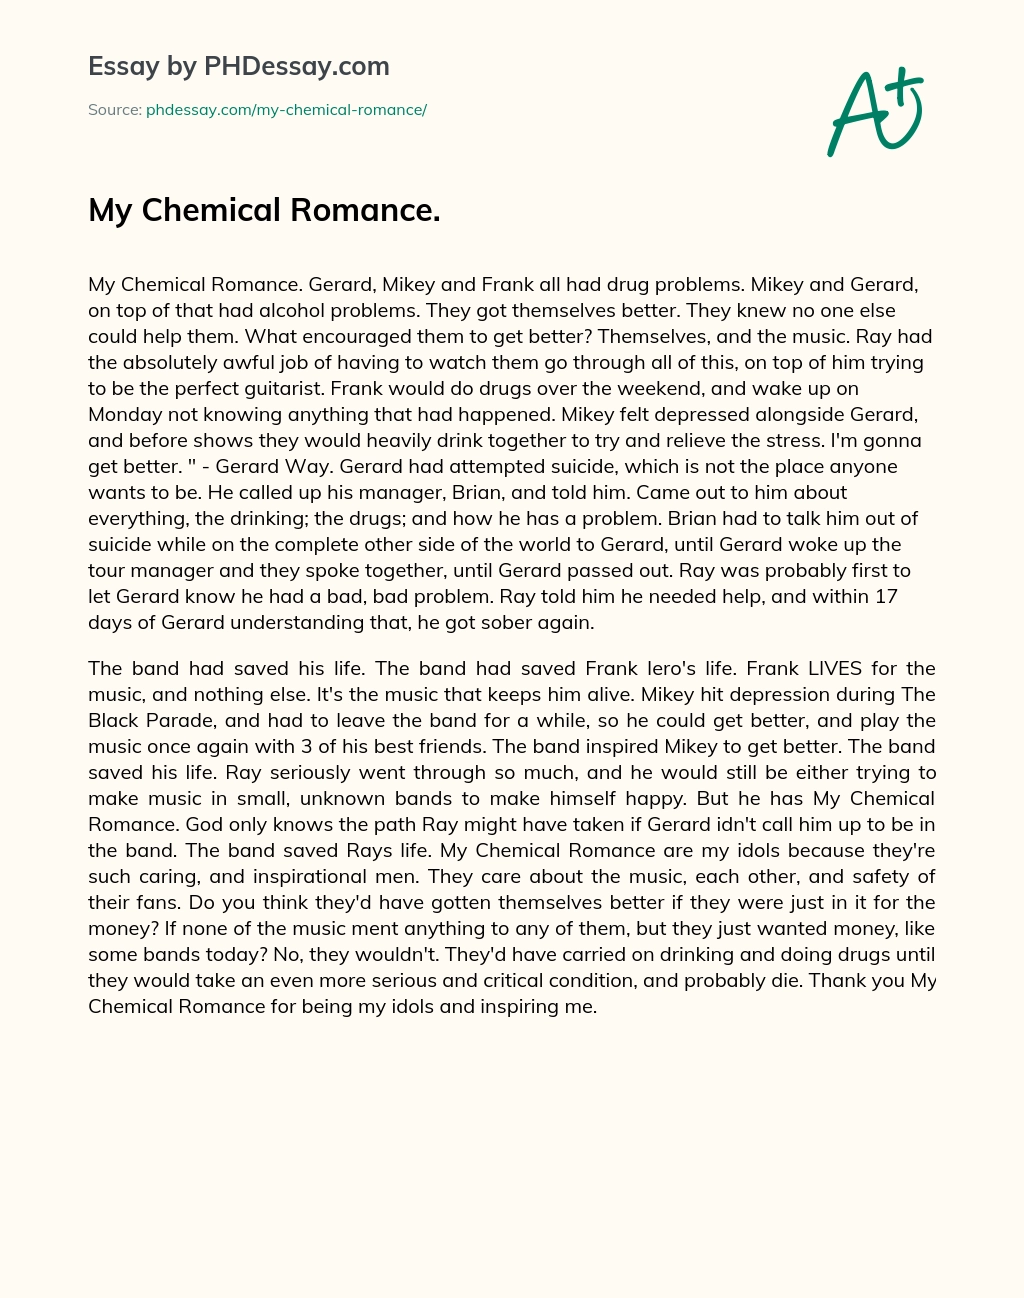 My Chemical Romance. essay